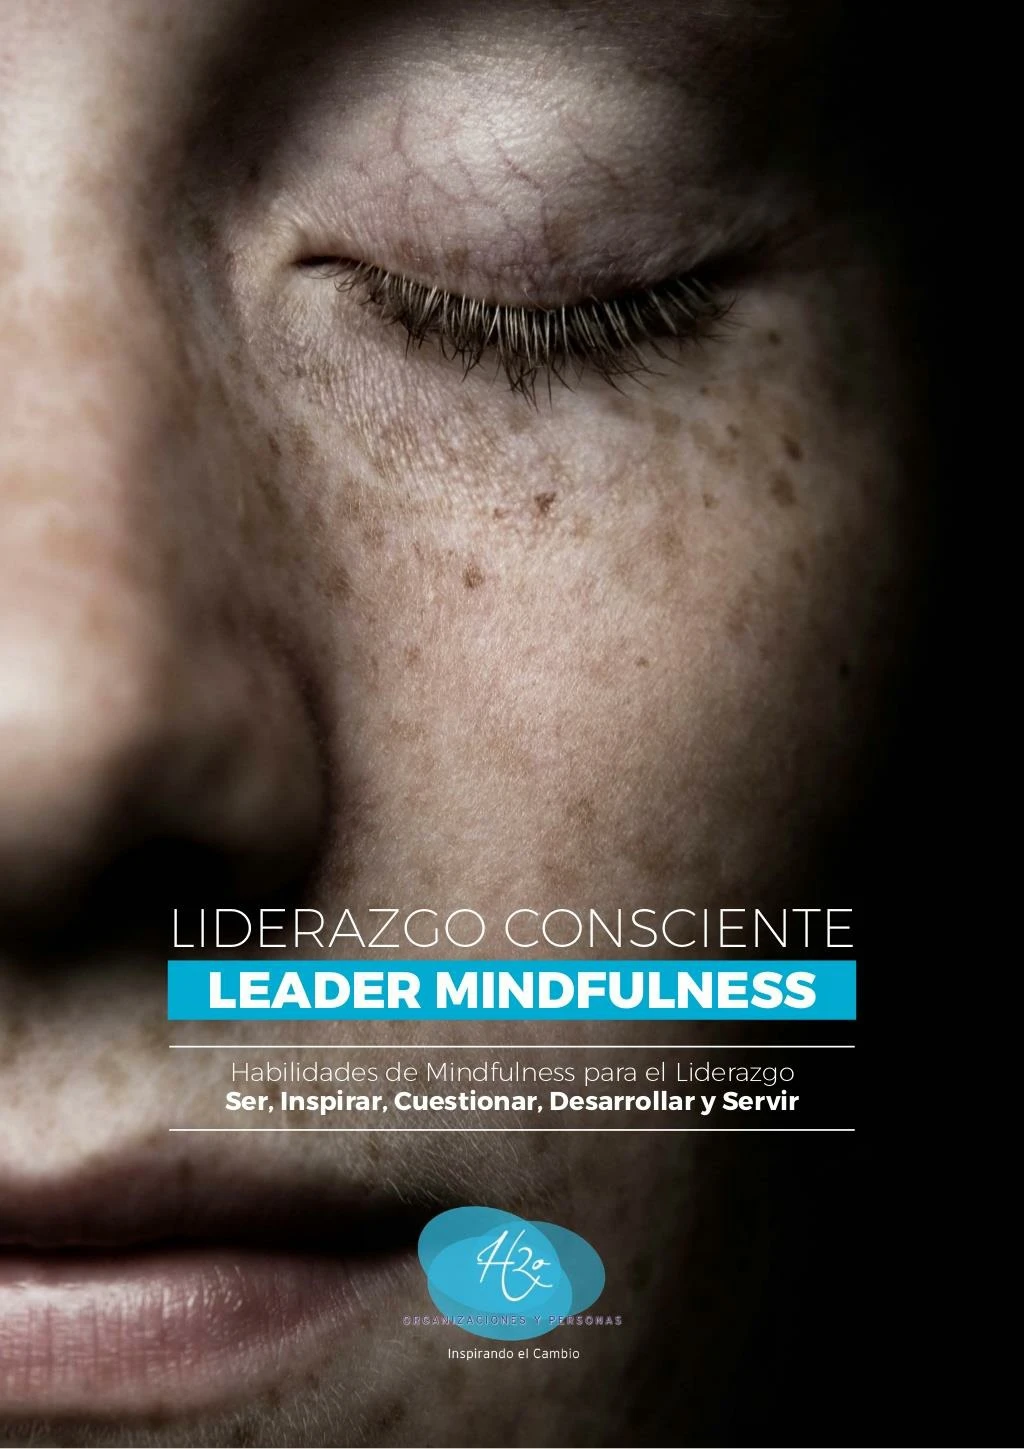 leader mindfulness habilidades de mindfulness para un liderazgo efectivo